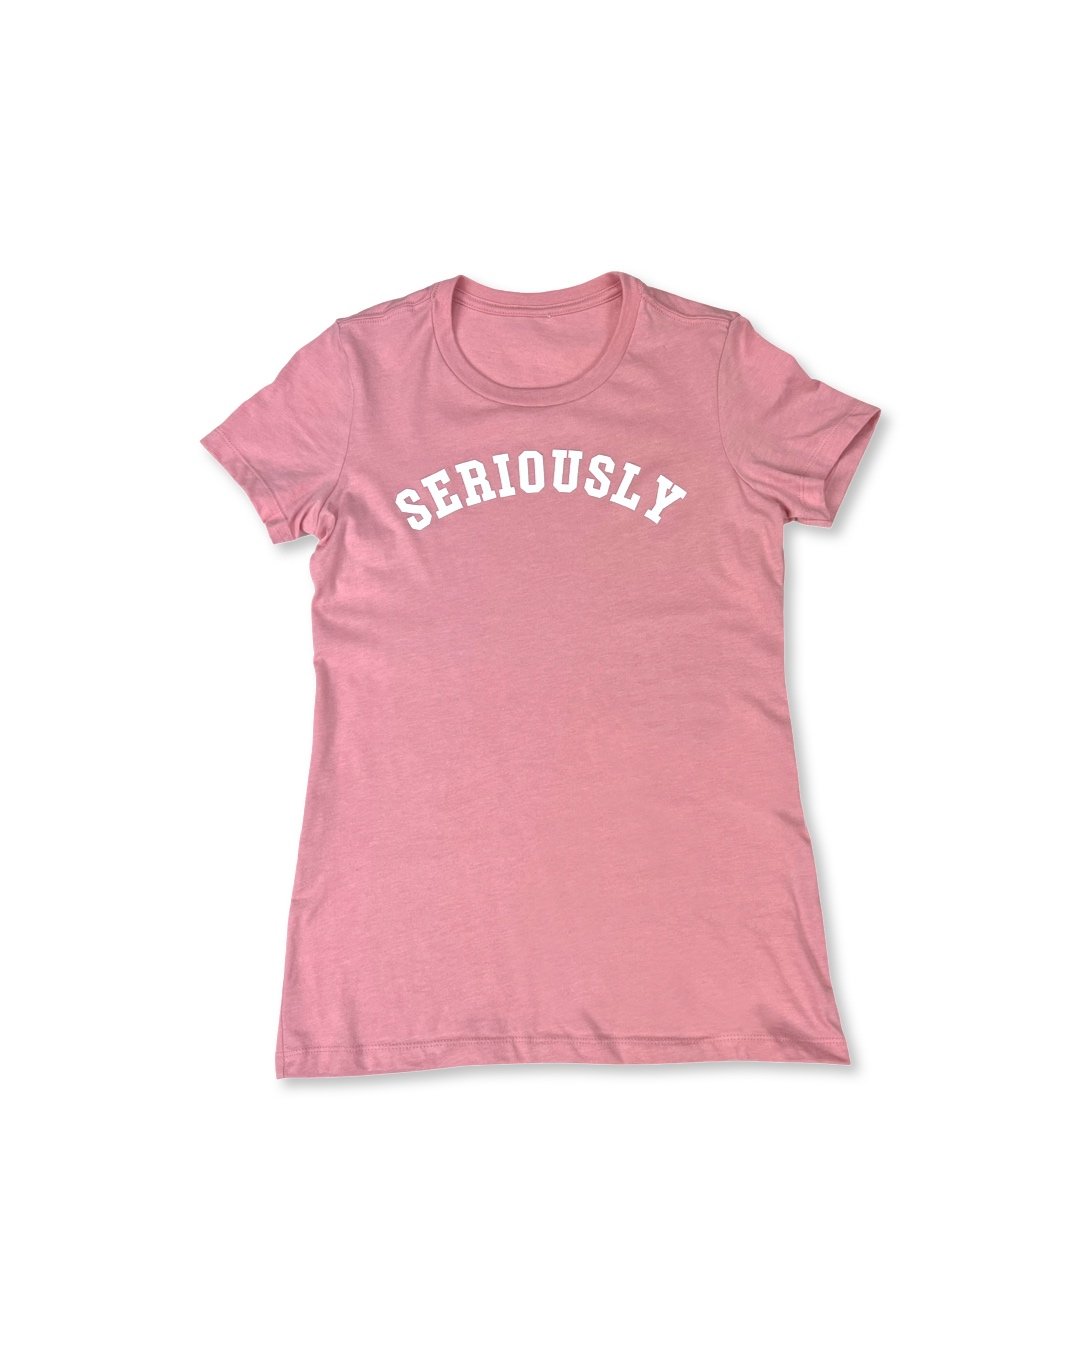 shirt-pink2.jpg